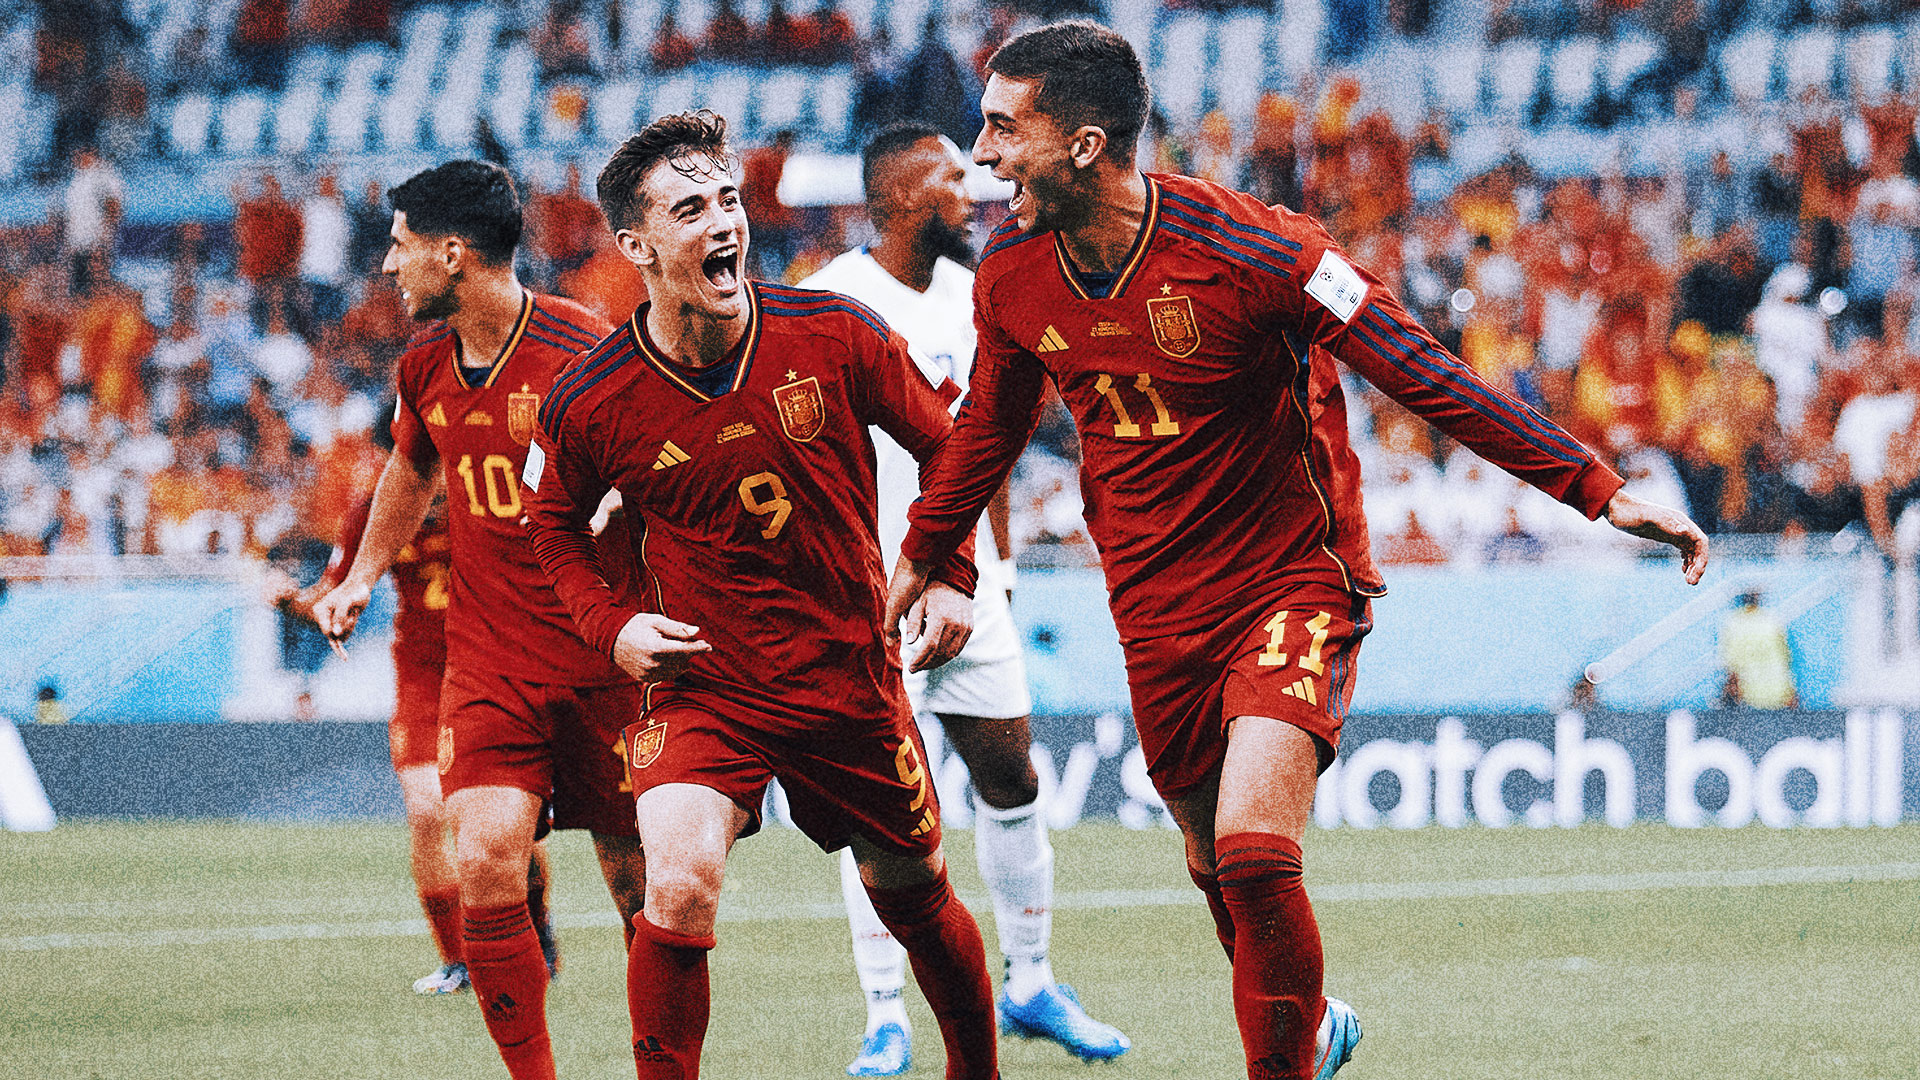 Espanha vs Costa Rica: Mundial 2022 - Blog bwin Portugal